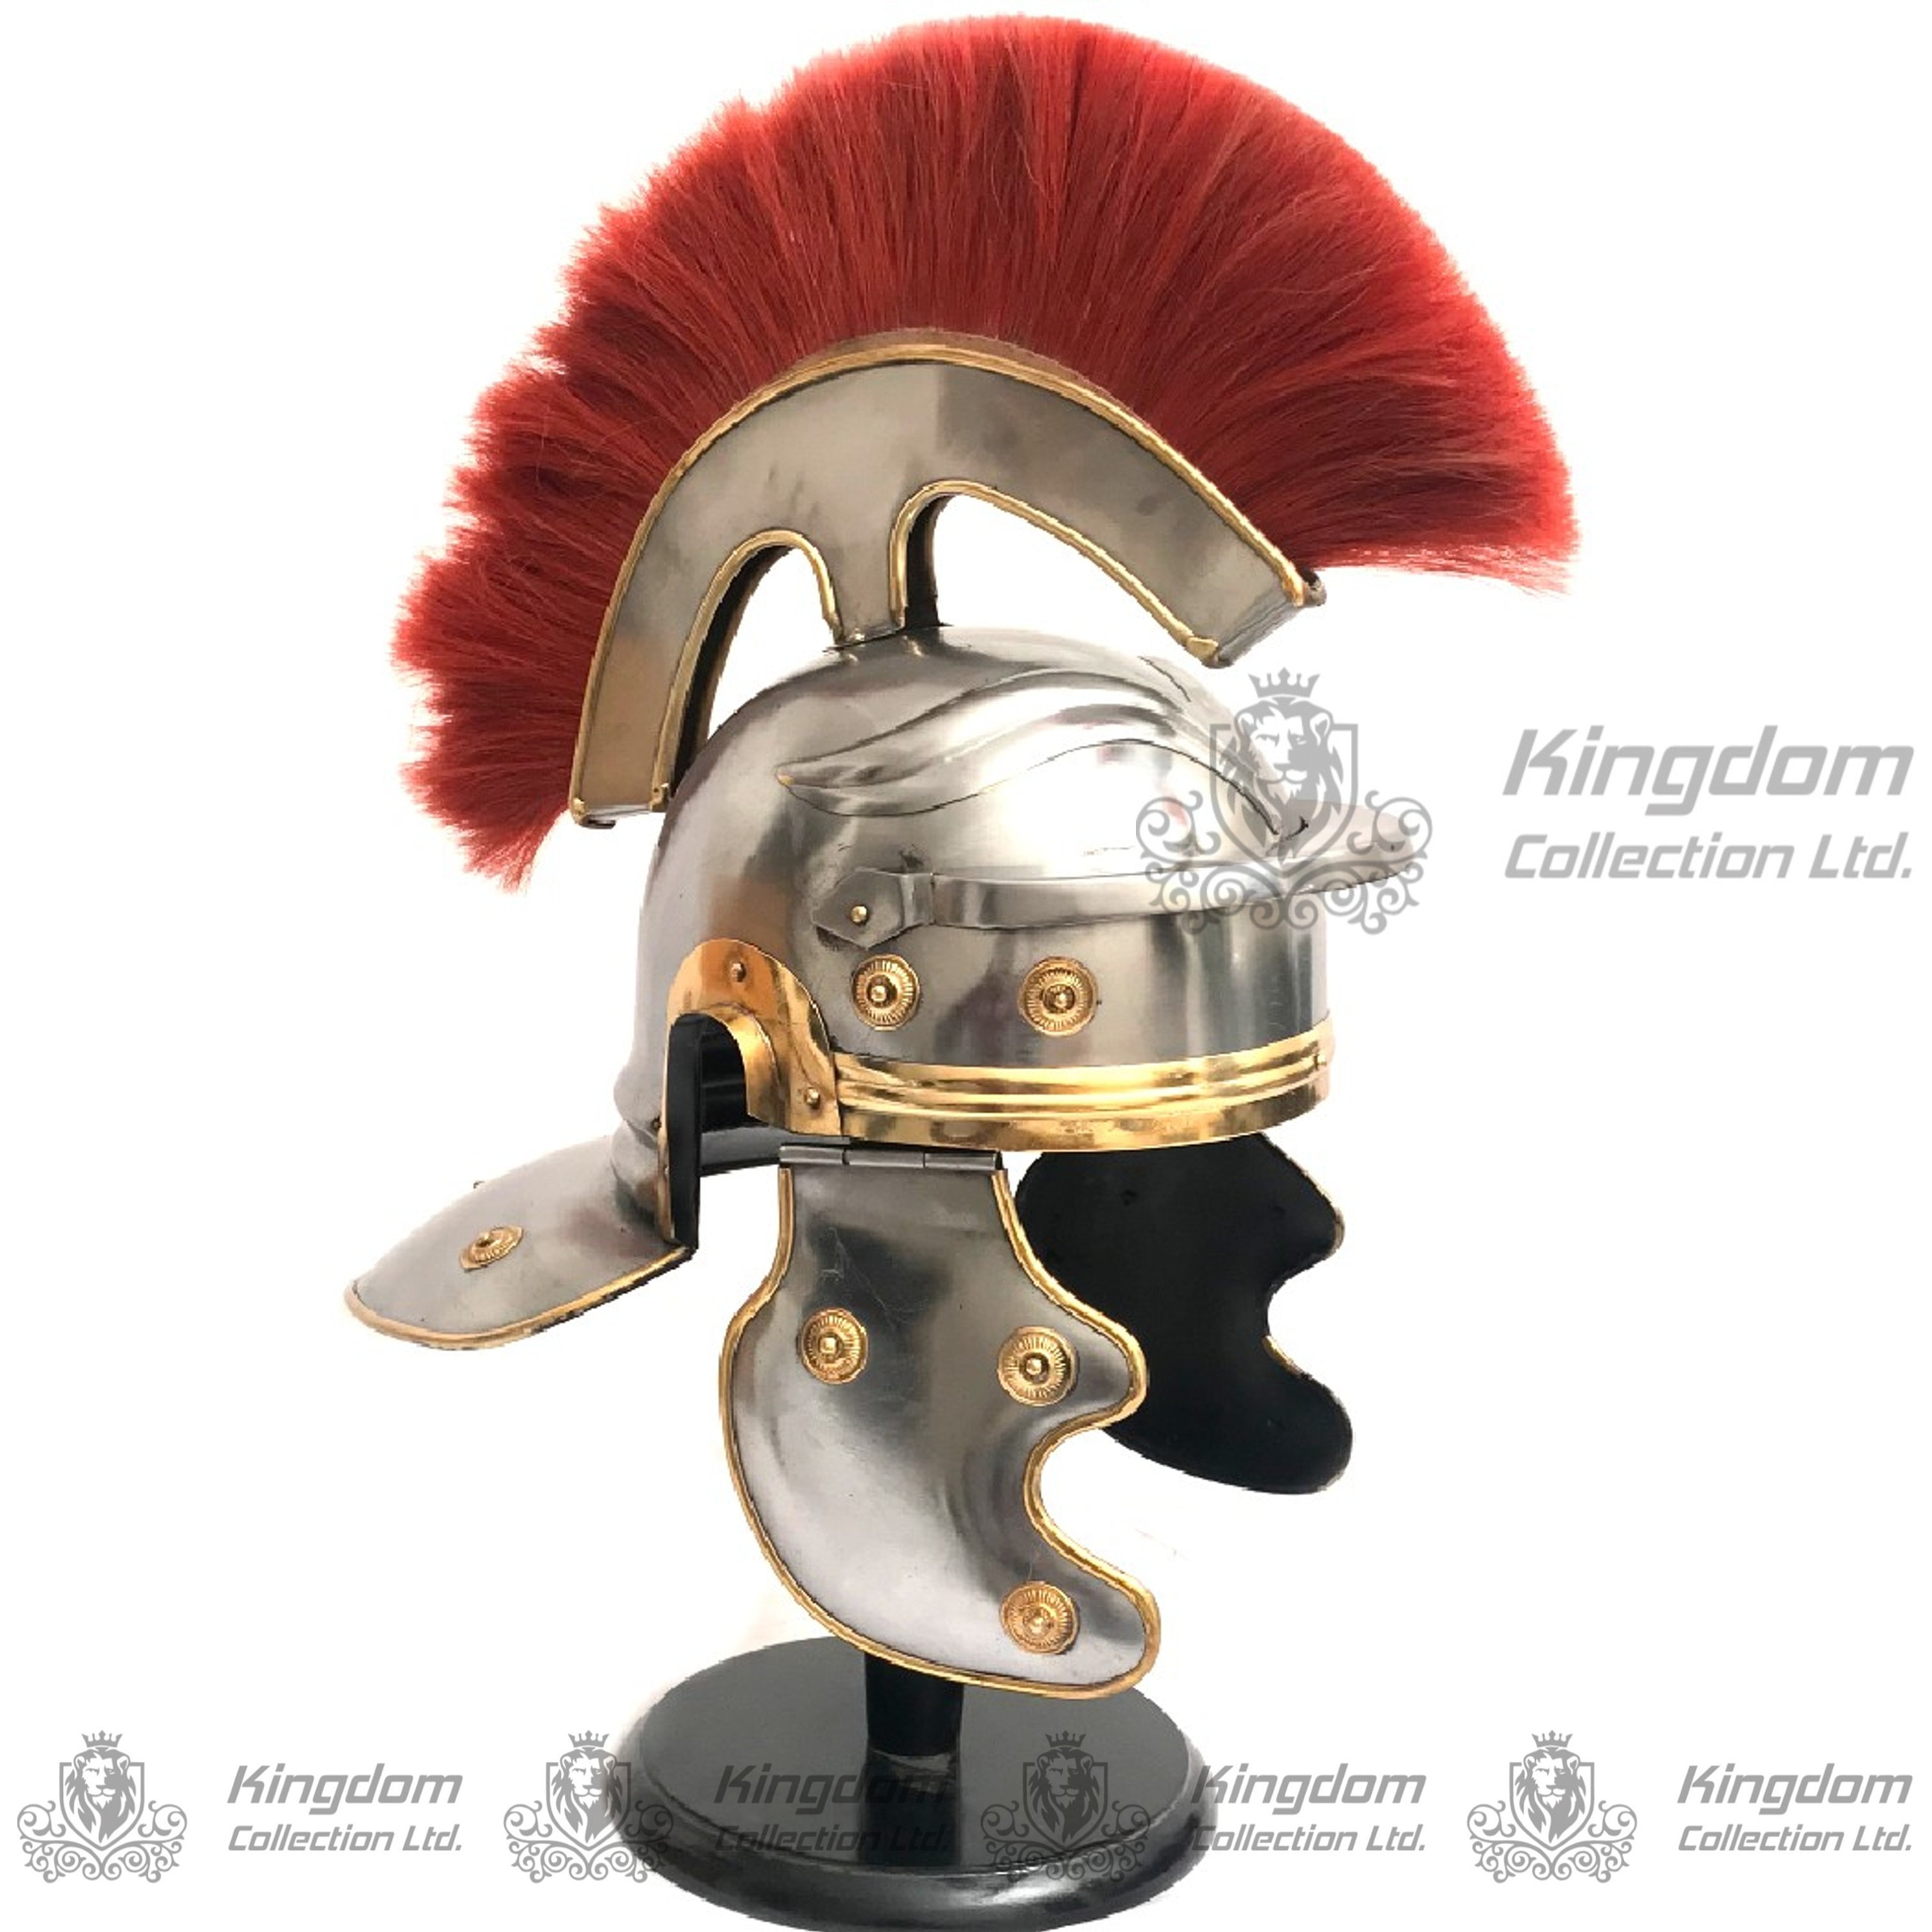 Details about   Medieval Roman Centurion Helmet Armor Red Plume Knight Crusader Armor 